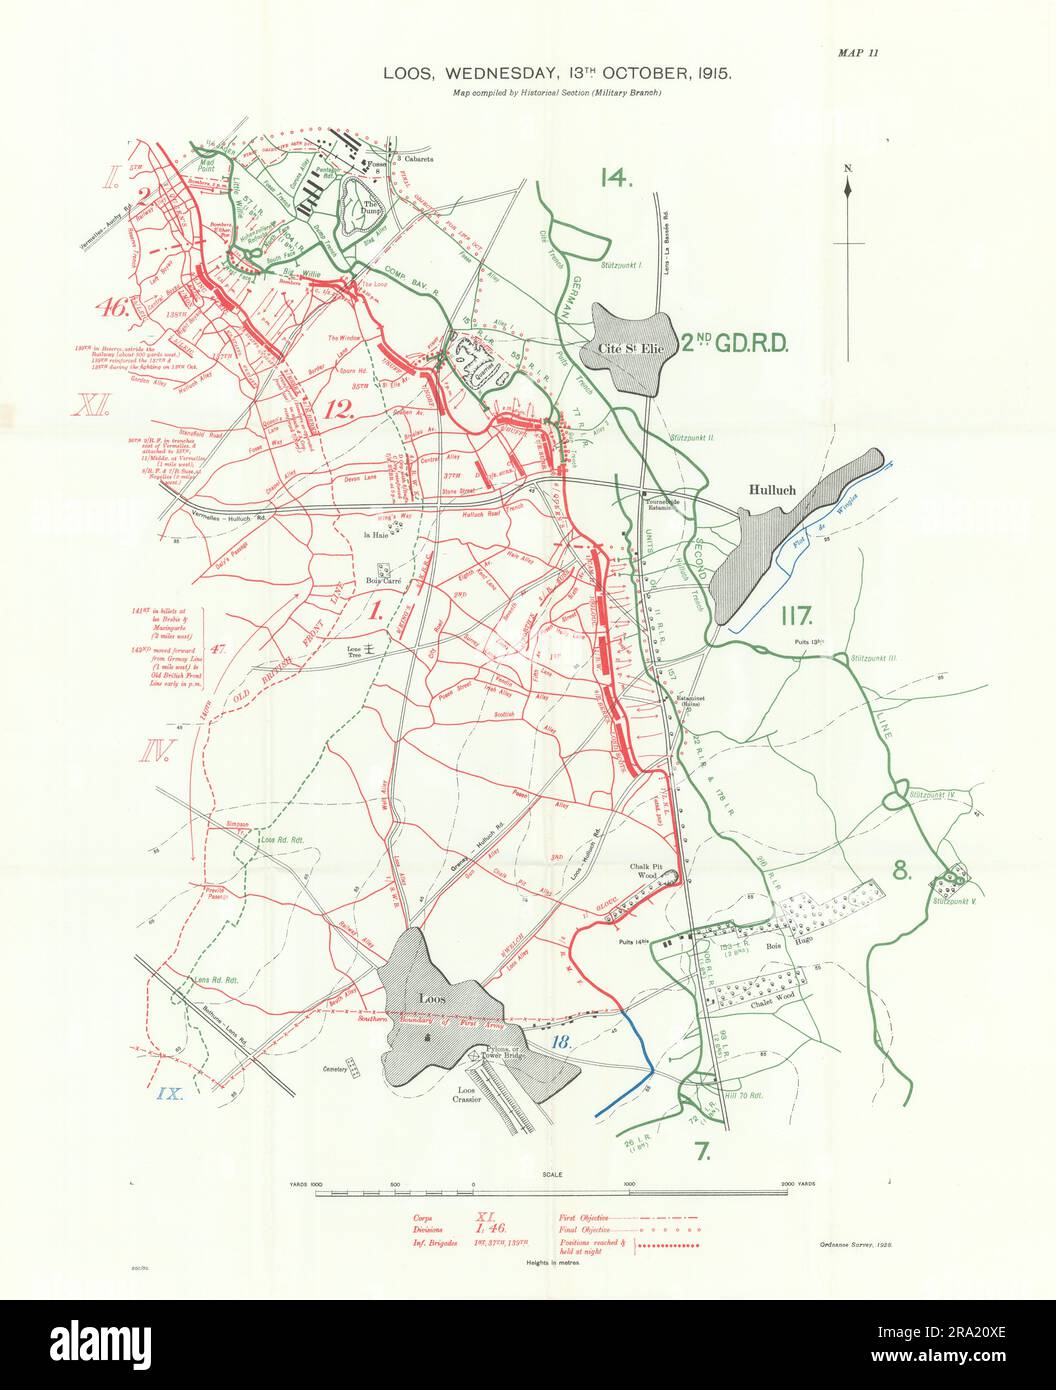 Bataille de Loos, mercredi 13th octobre 1915. WW1. Trenches 1927 ancienne carte Banque D'Images